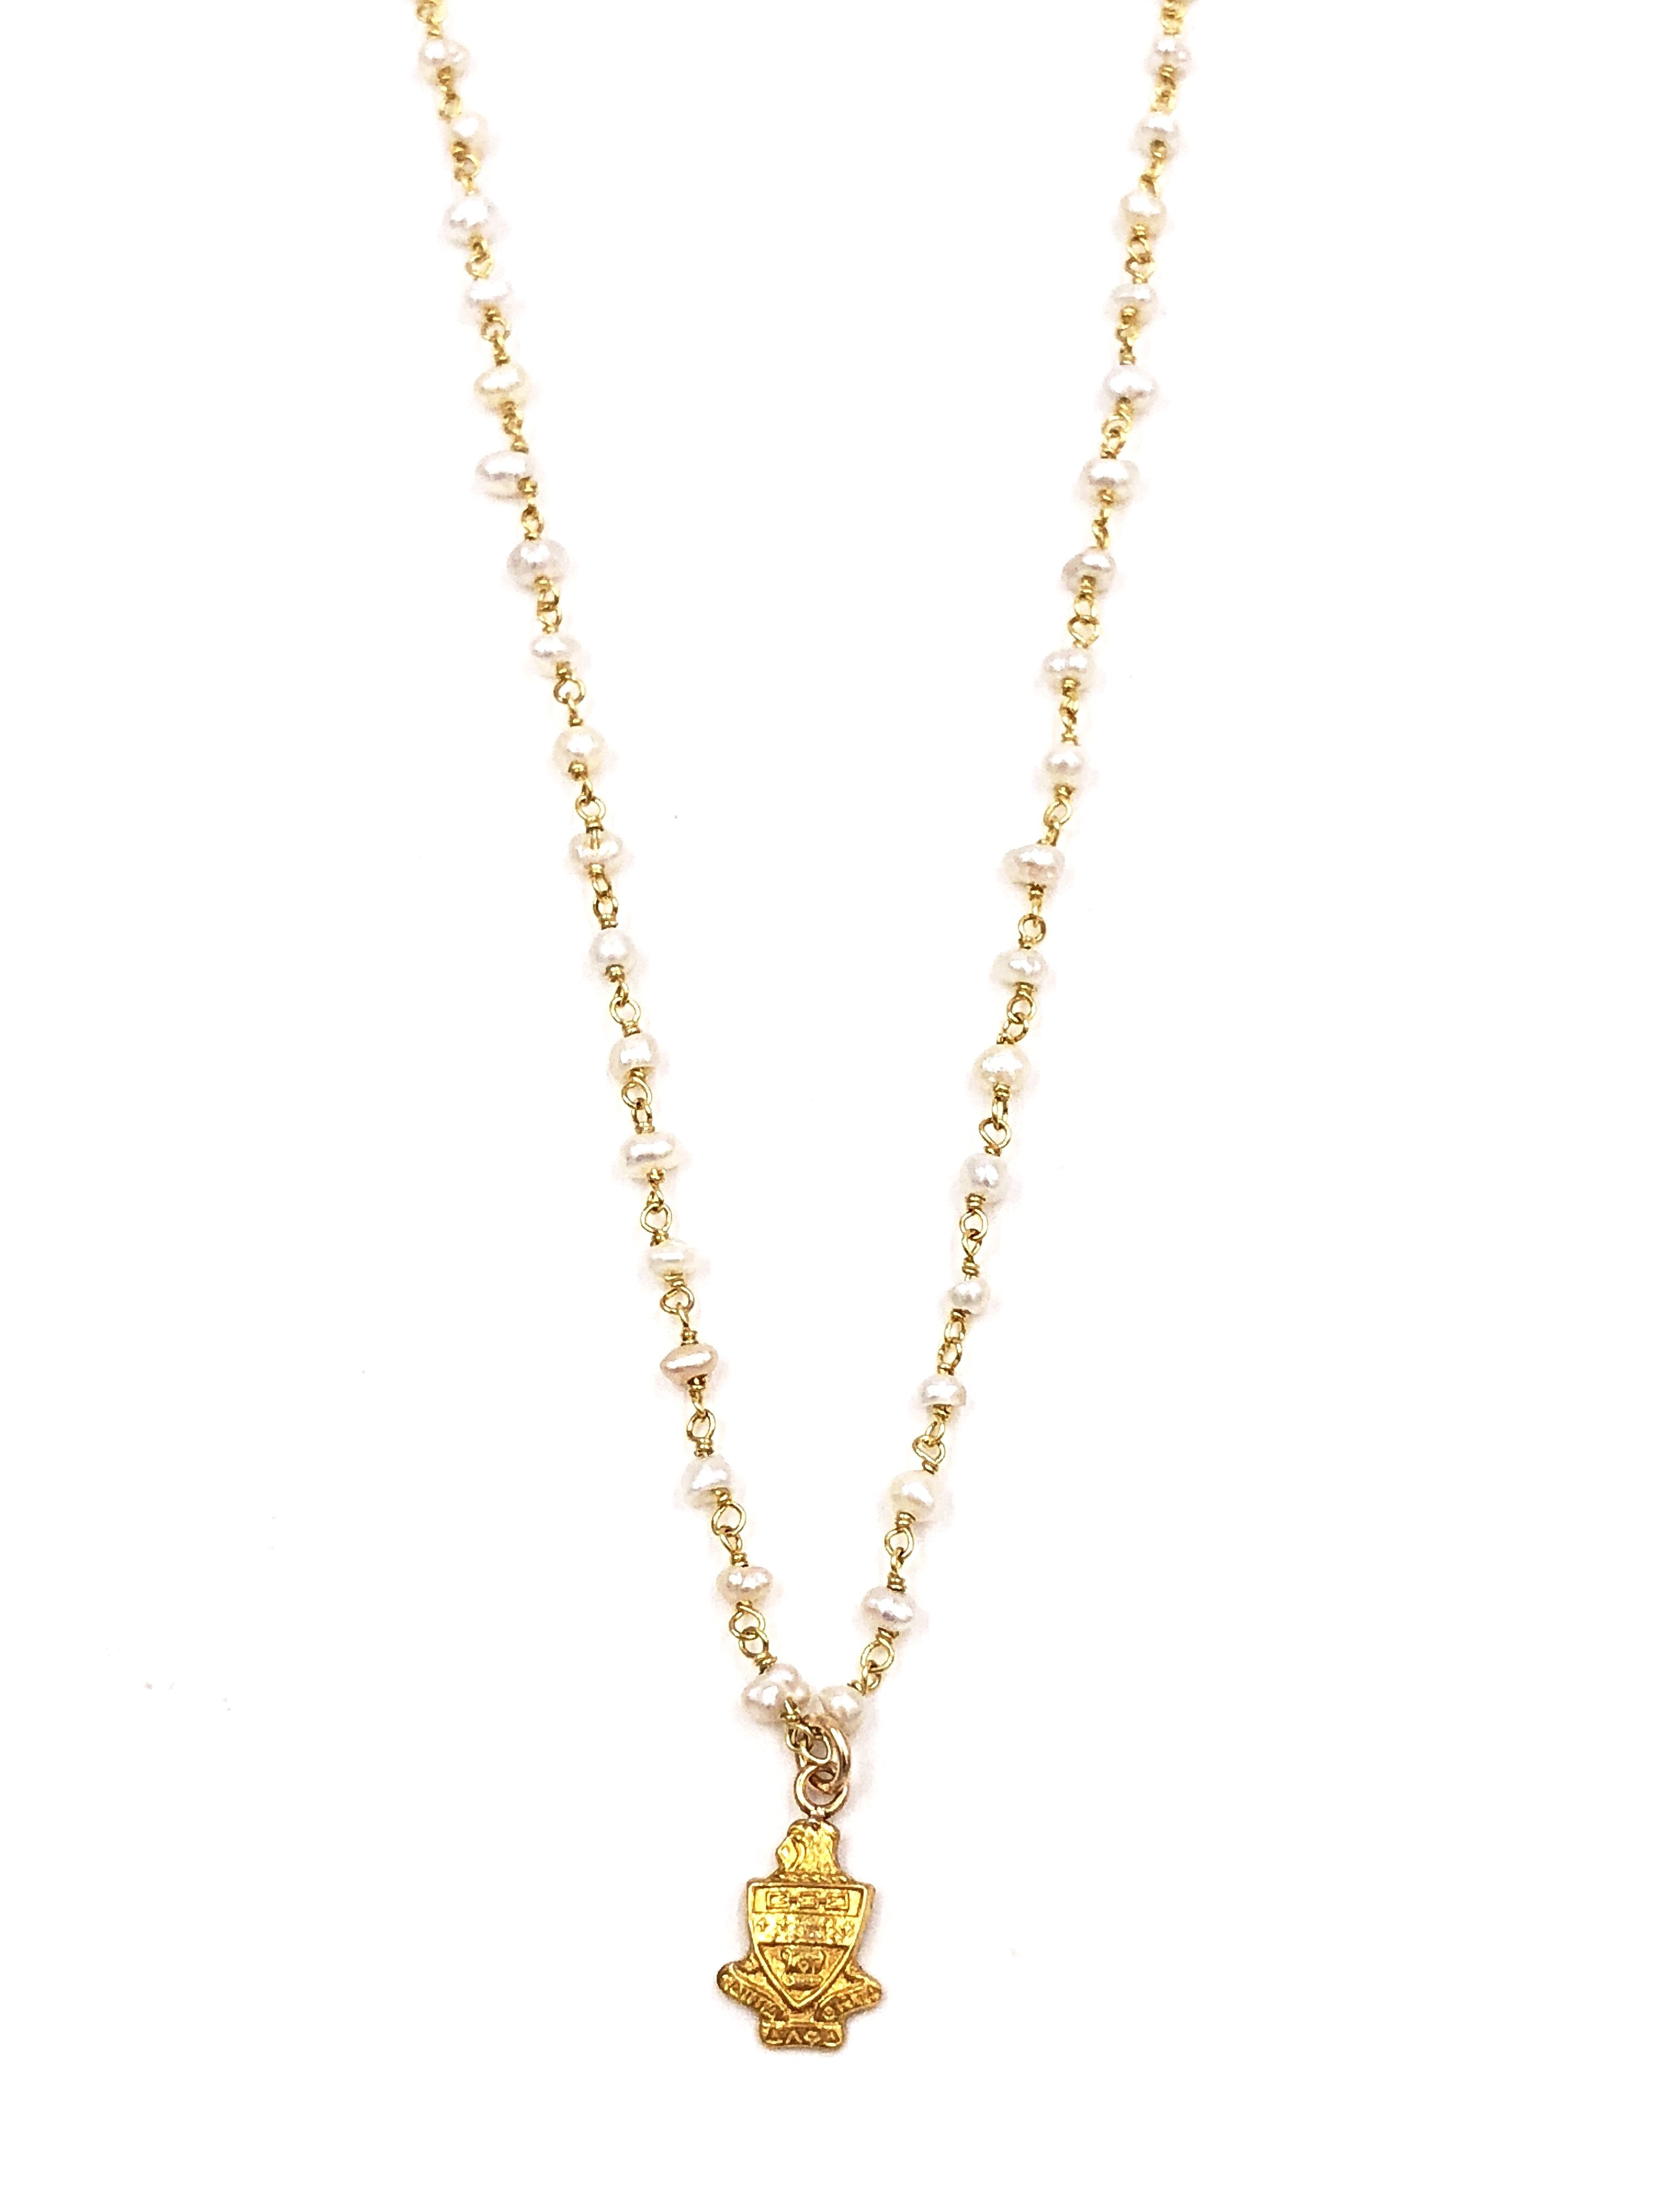 Vintage Kappa Alpha Theta Crest Freshwater Pearl Necklace